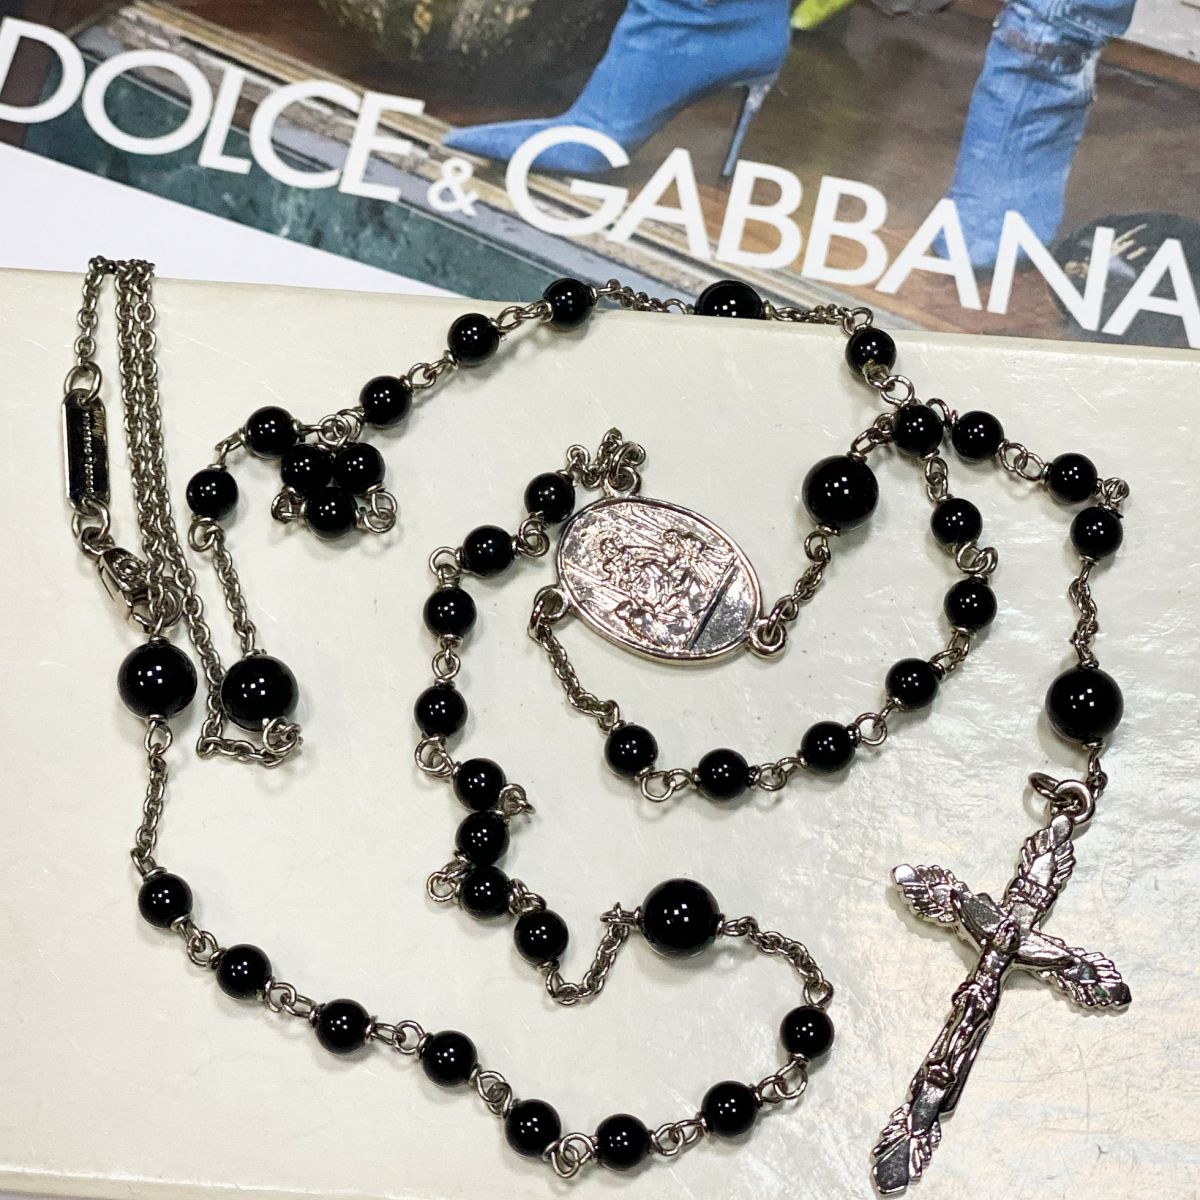 Подвеска Dolce Gabbana цена 9 231 руб 